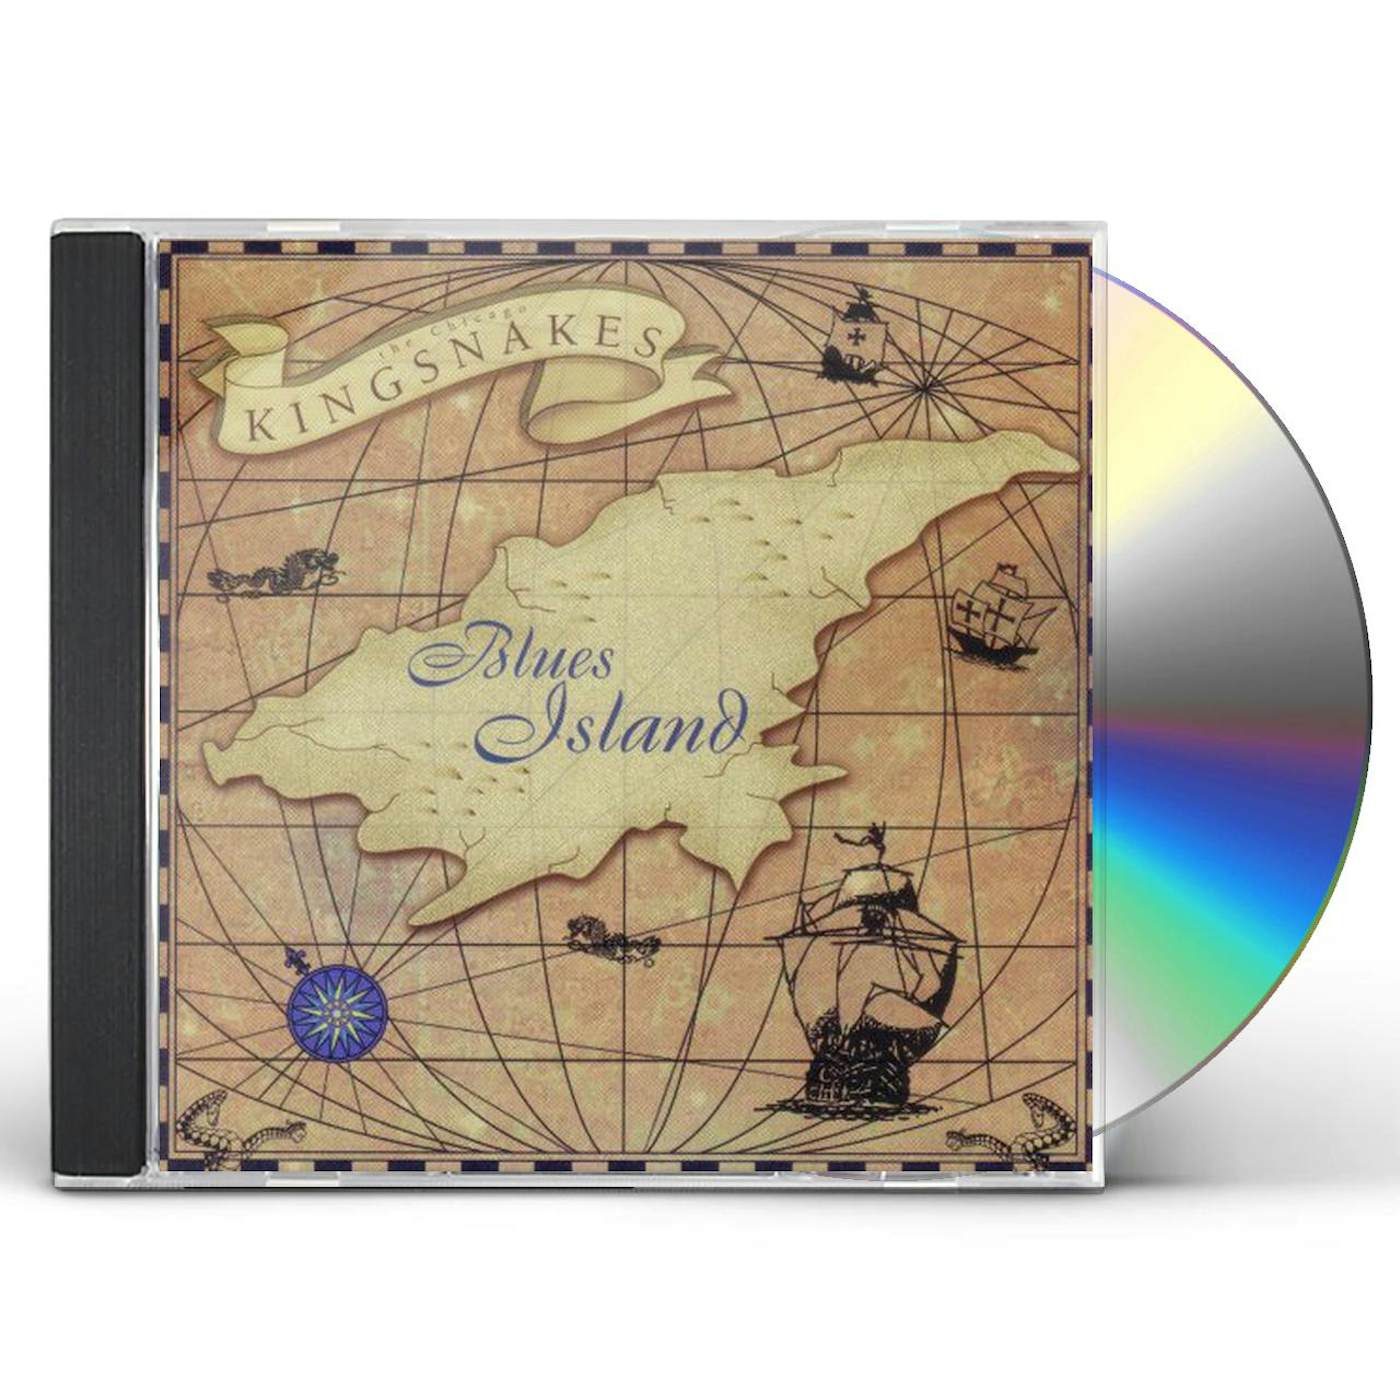 The Kingsnakes BLUES ISLAND CD